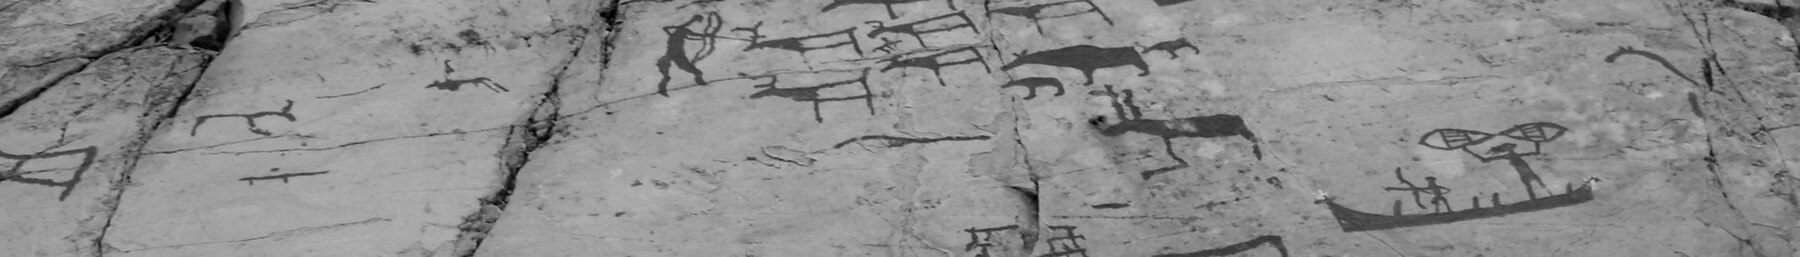 Alta banner Rock carvings.jpg